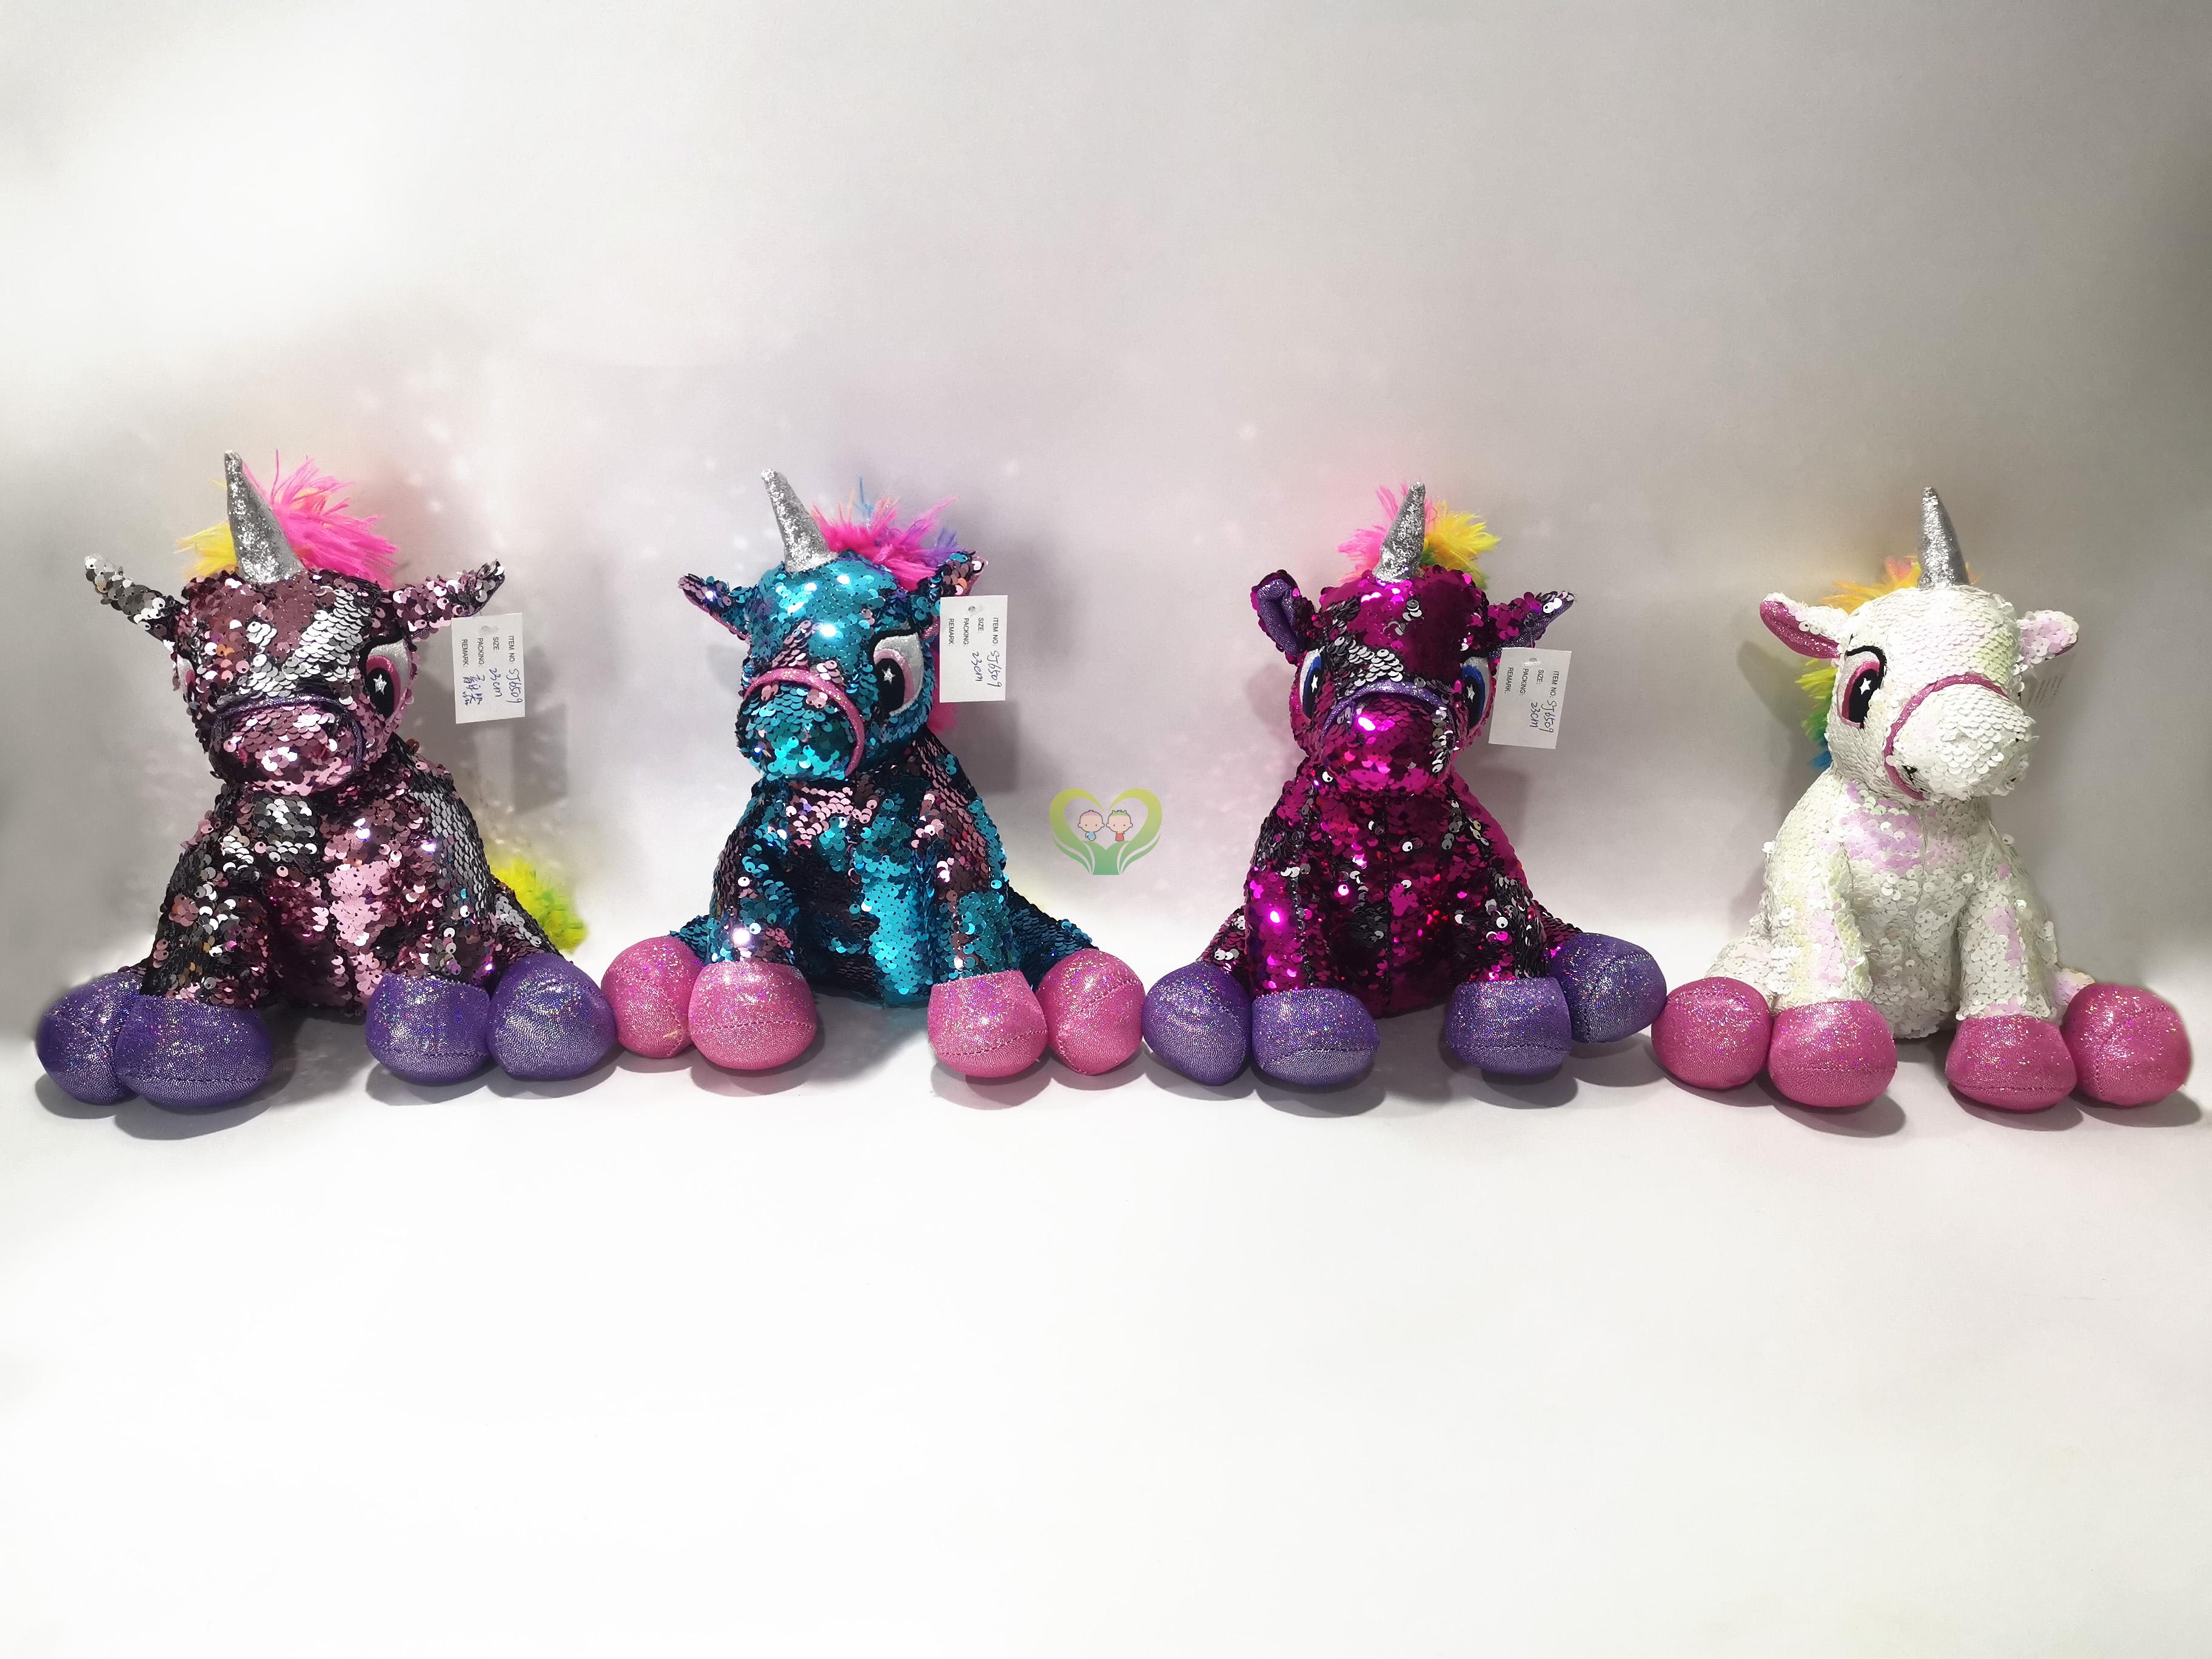 2019 Spring Promotion Items: 4asst. cute animals；Sequin Unicorn